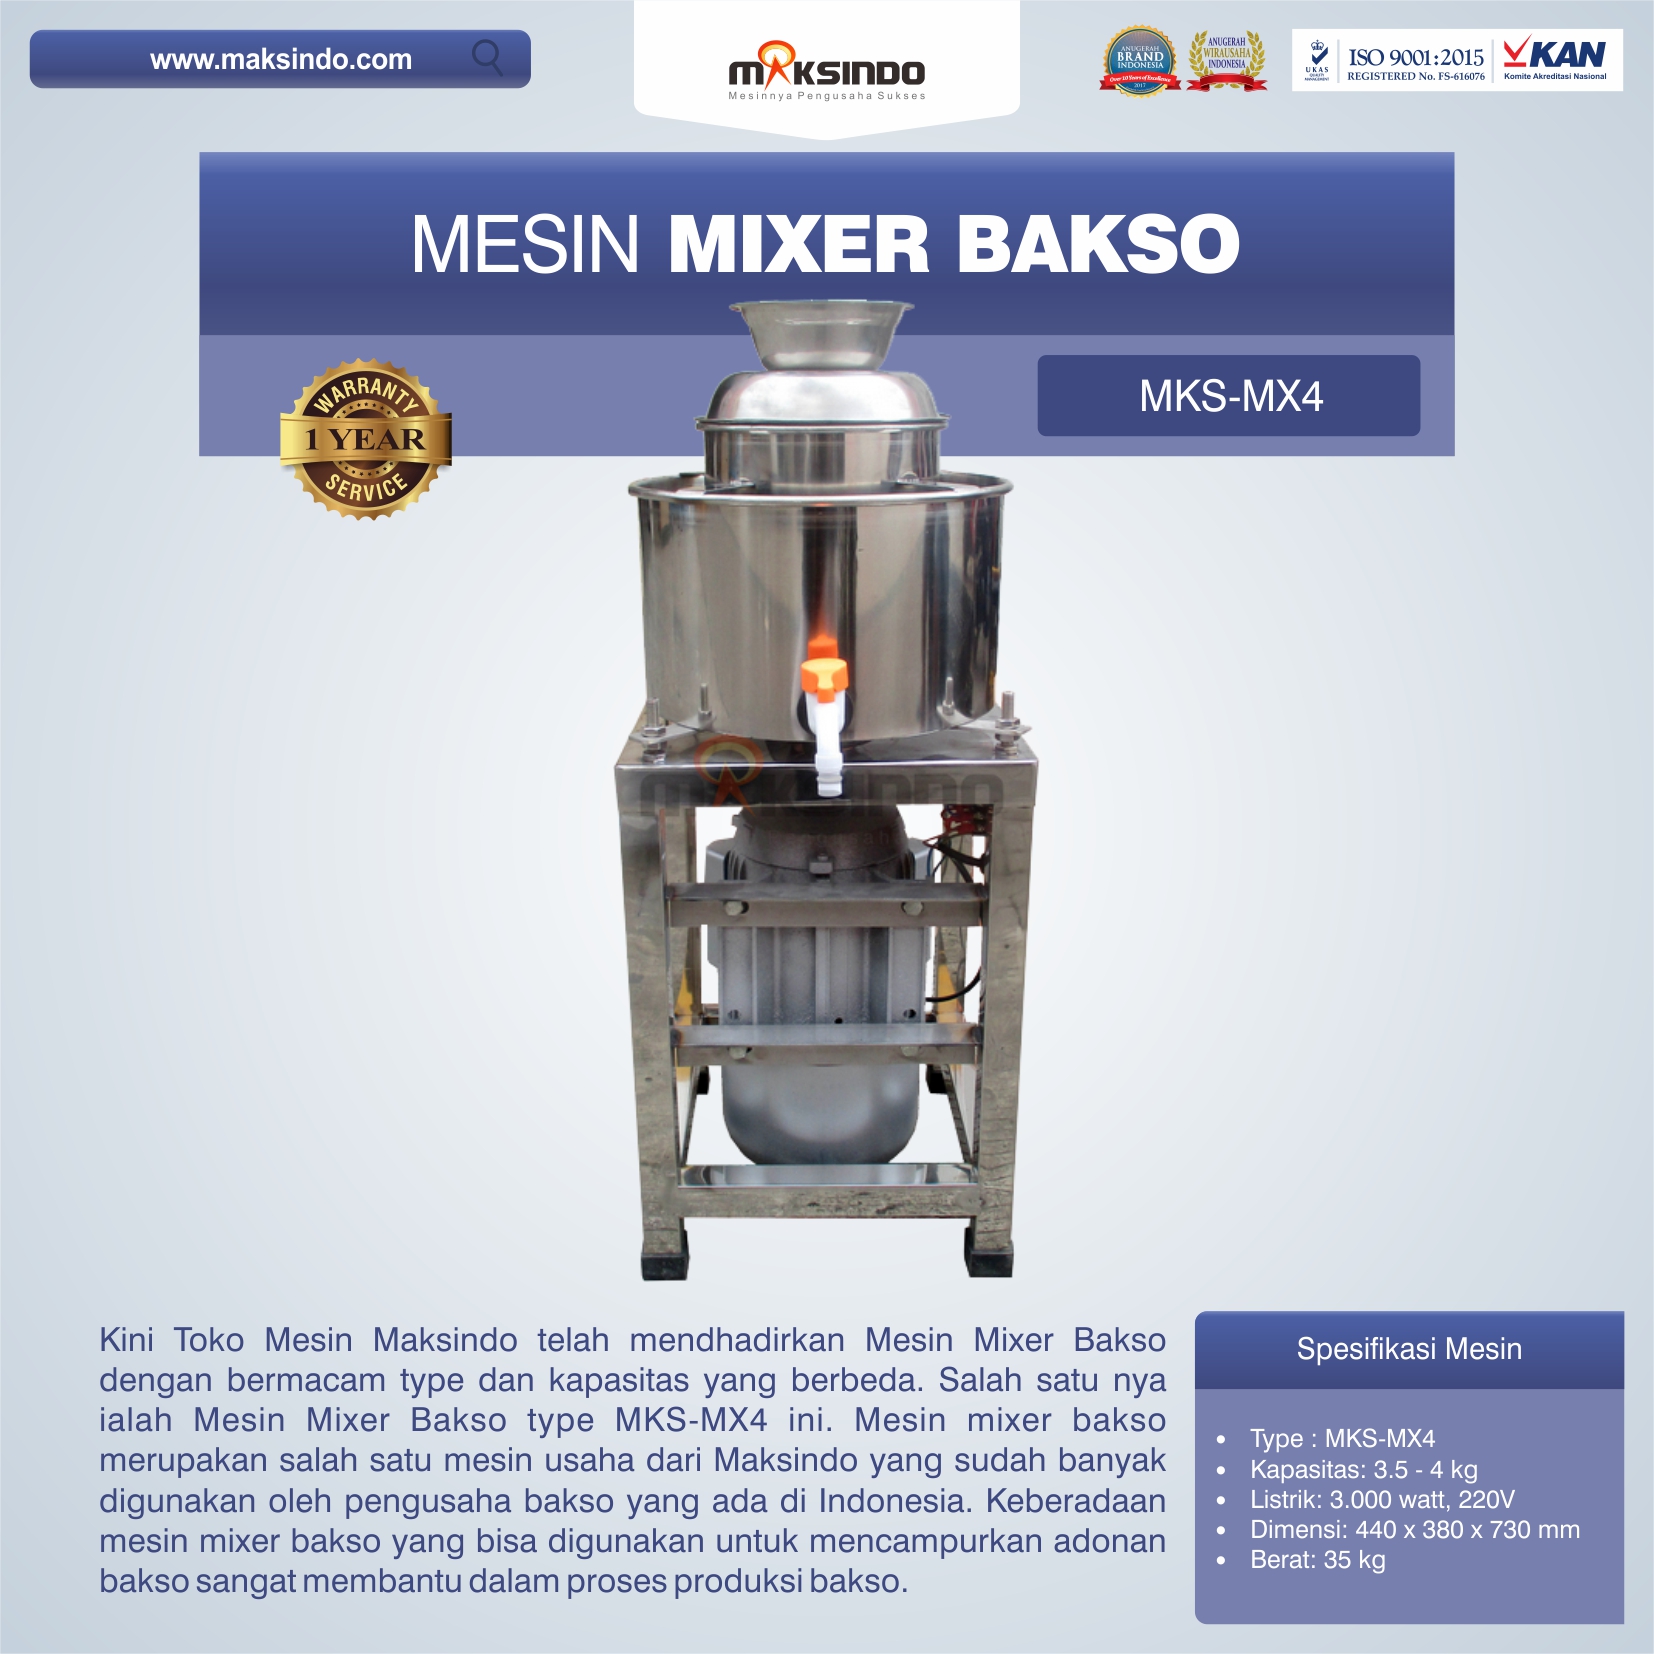 Jual Mesin Mixer Bakso MKS-MX4 di Tangerang